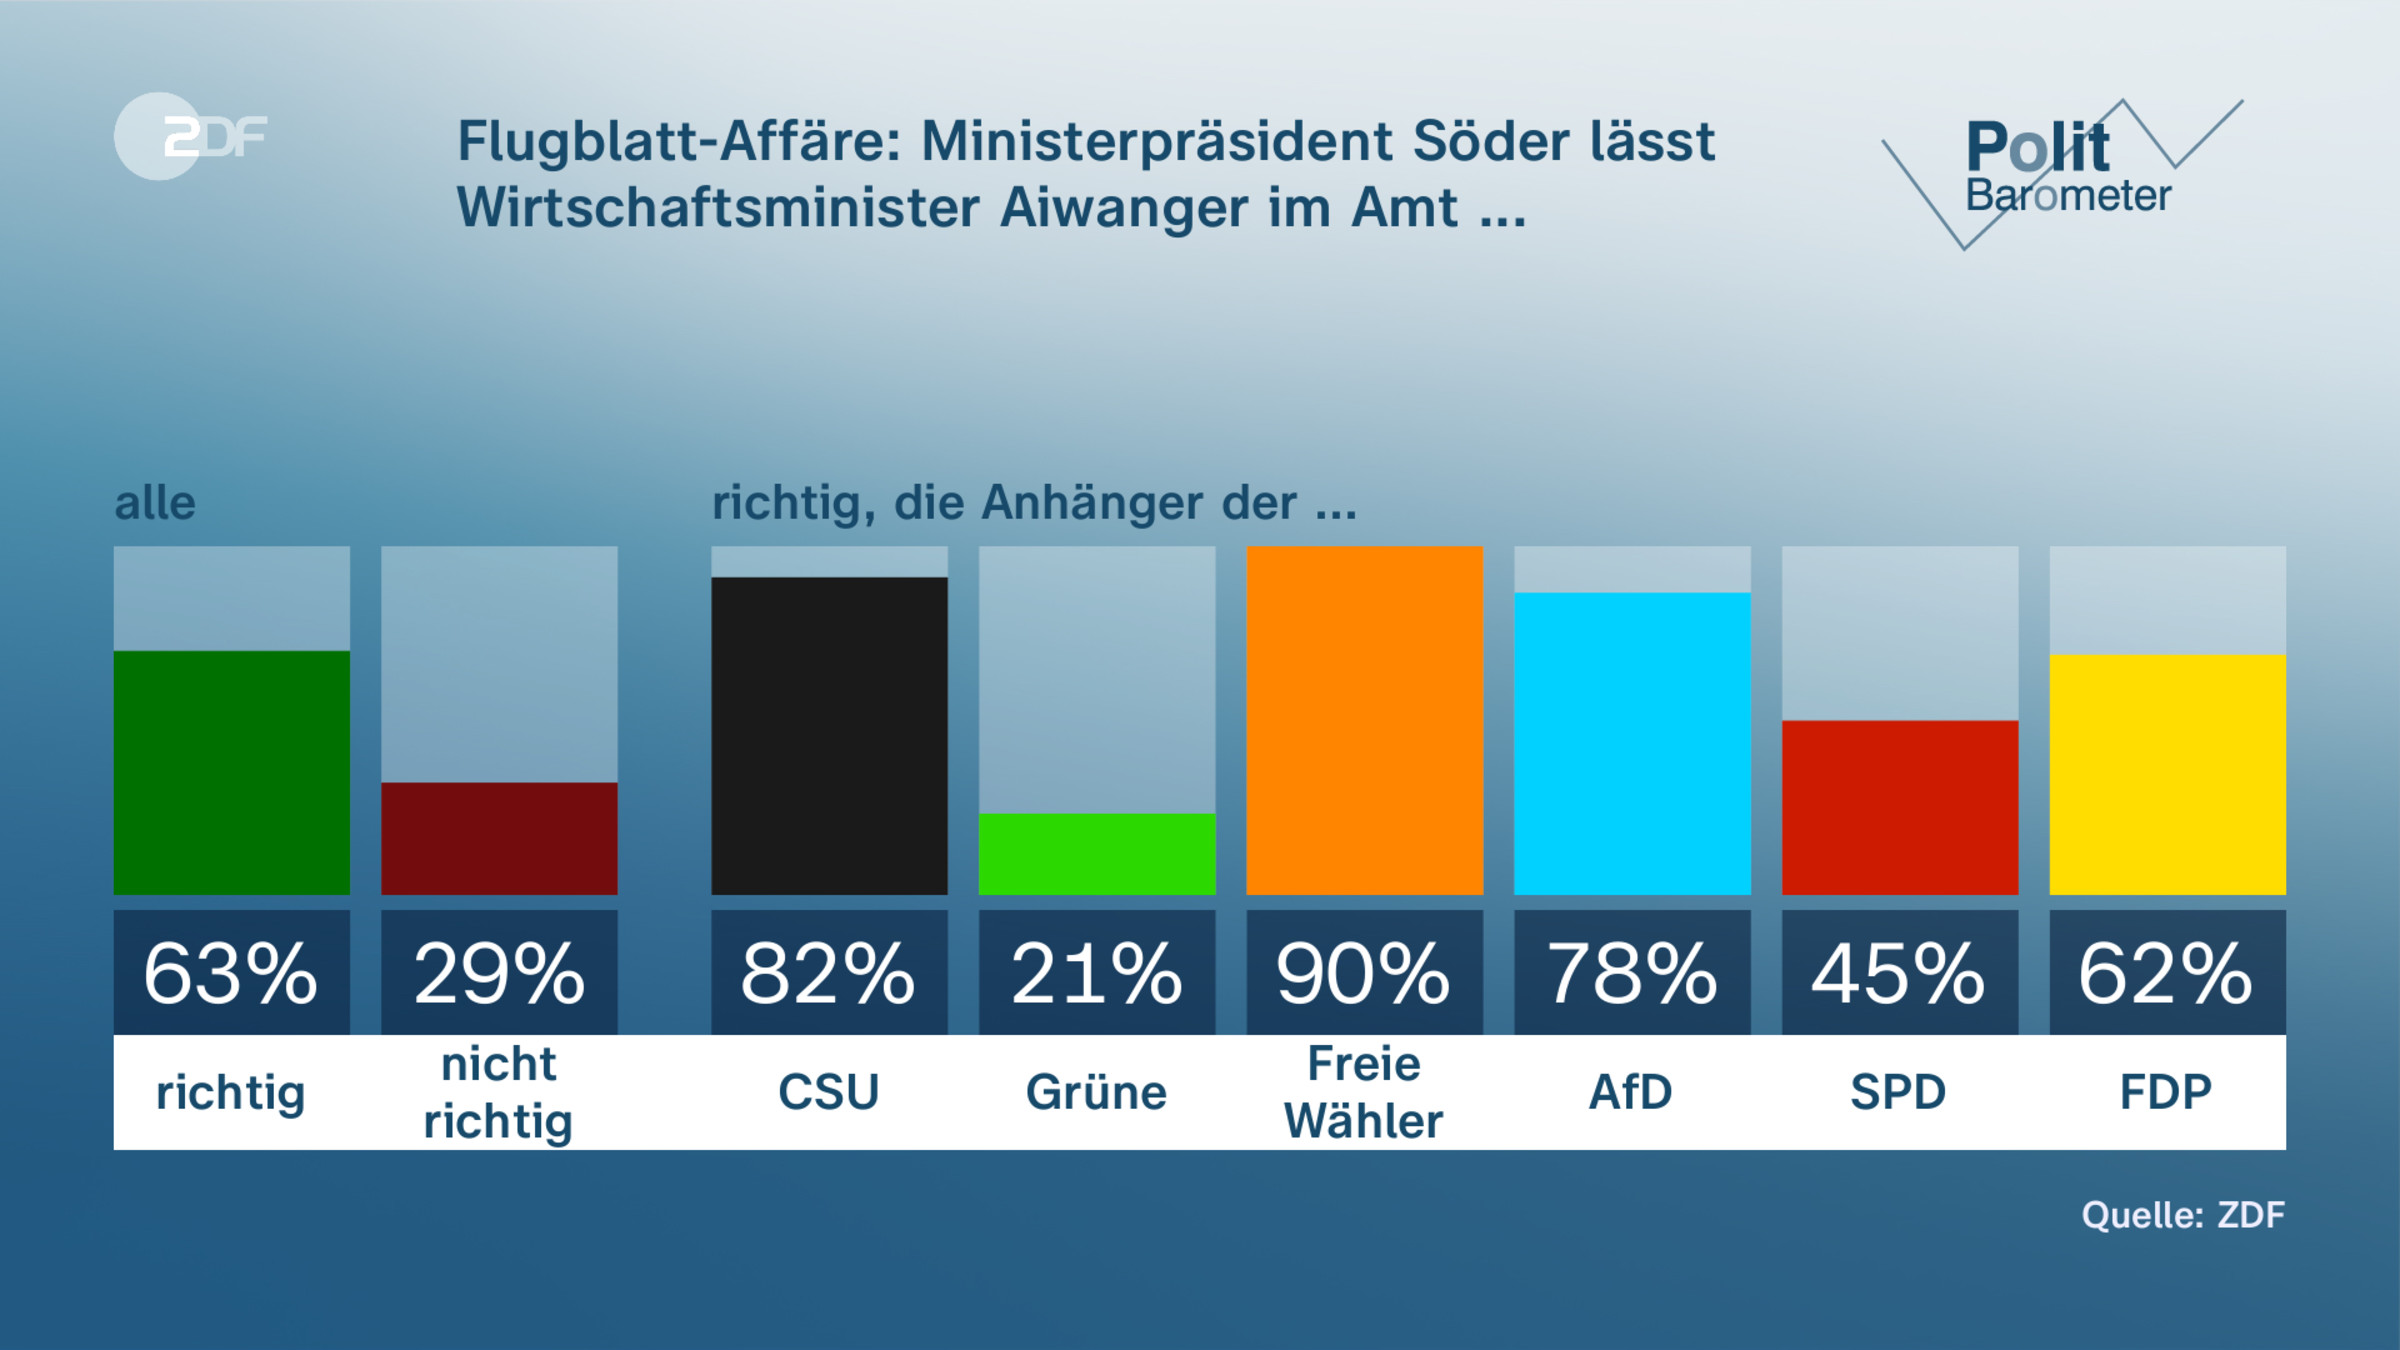 Flugblatt-Affäre: Ministerpräsident Söder lässt Wirtschaftsminister Aiwanger im Amt ...